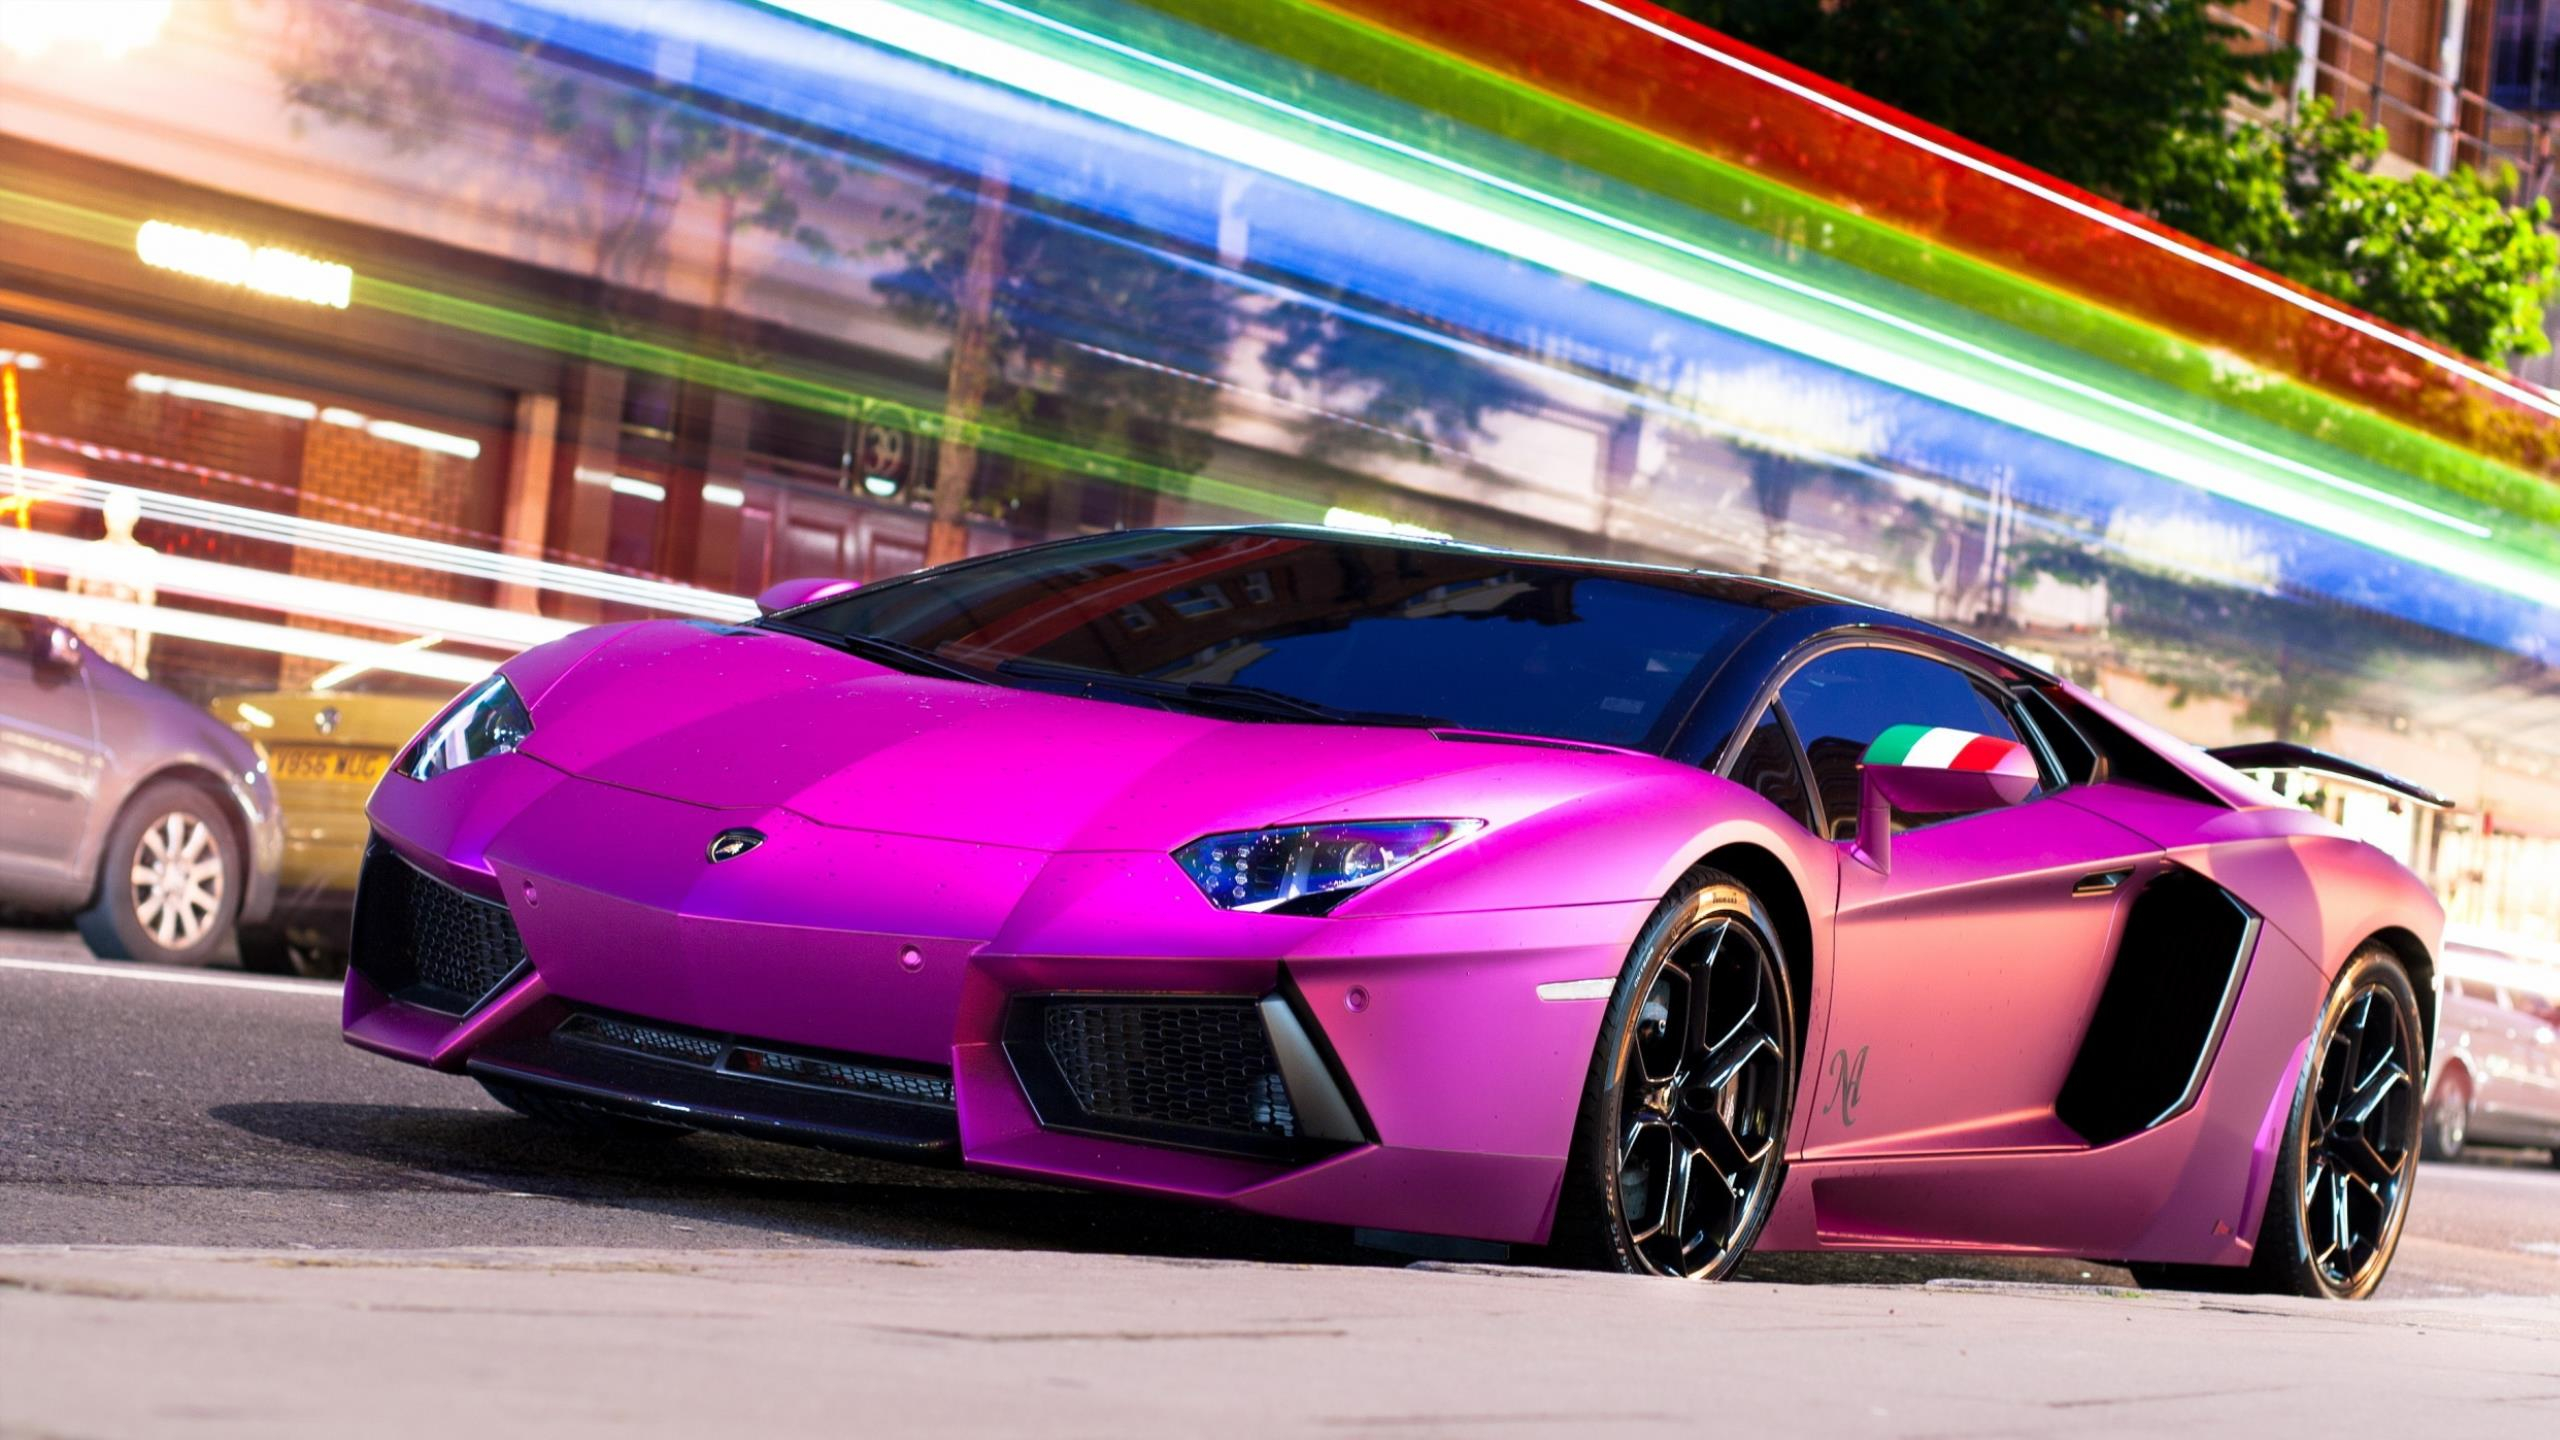 2560x1440 Pink Lamborghini Wallpapers Top Free Pink Lamborghini Backgrounds